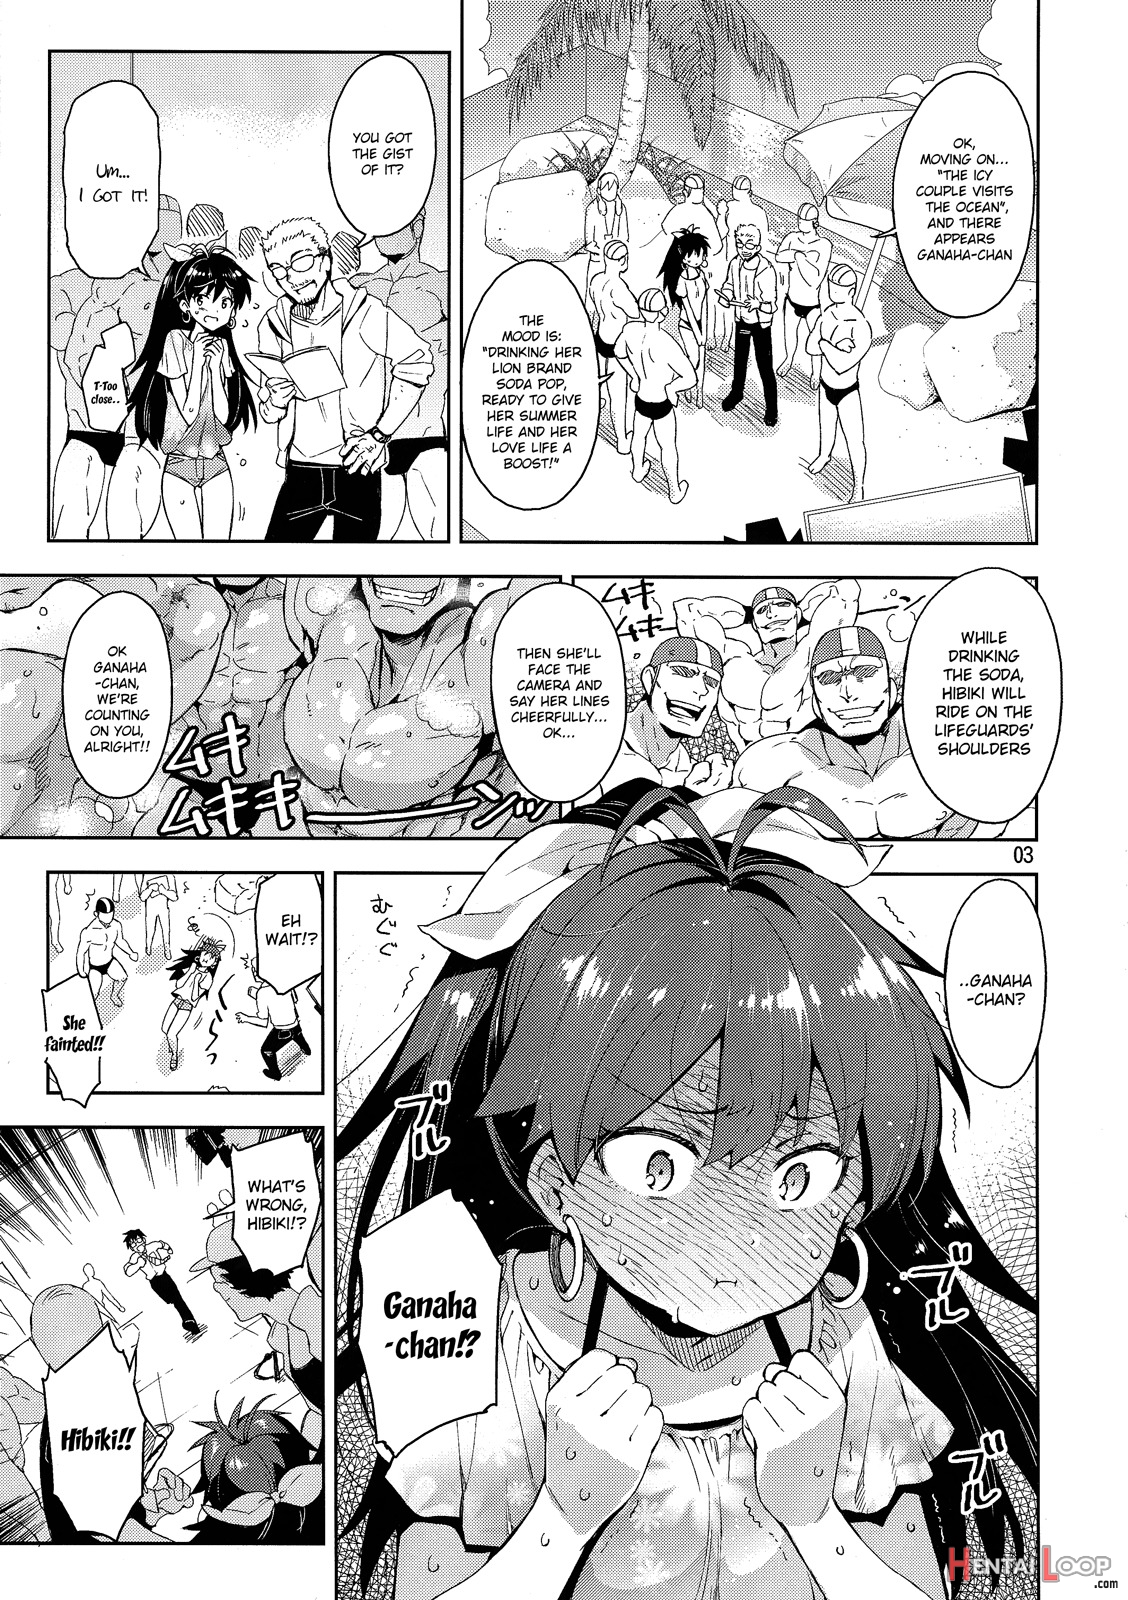 Hibiki Is In Heat! page 2